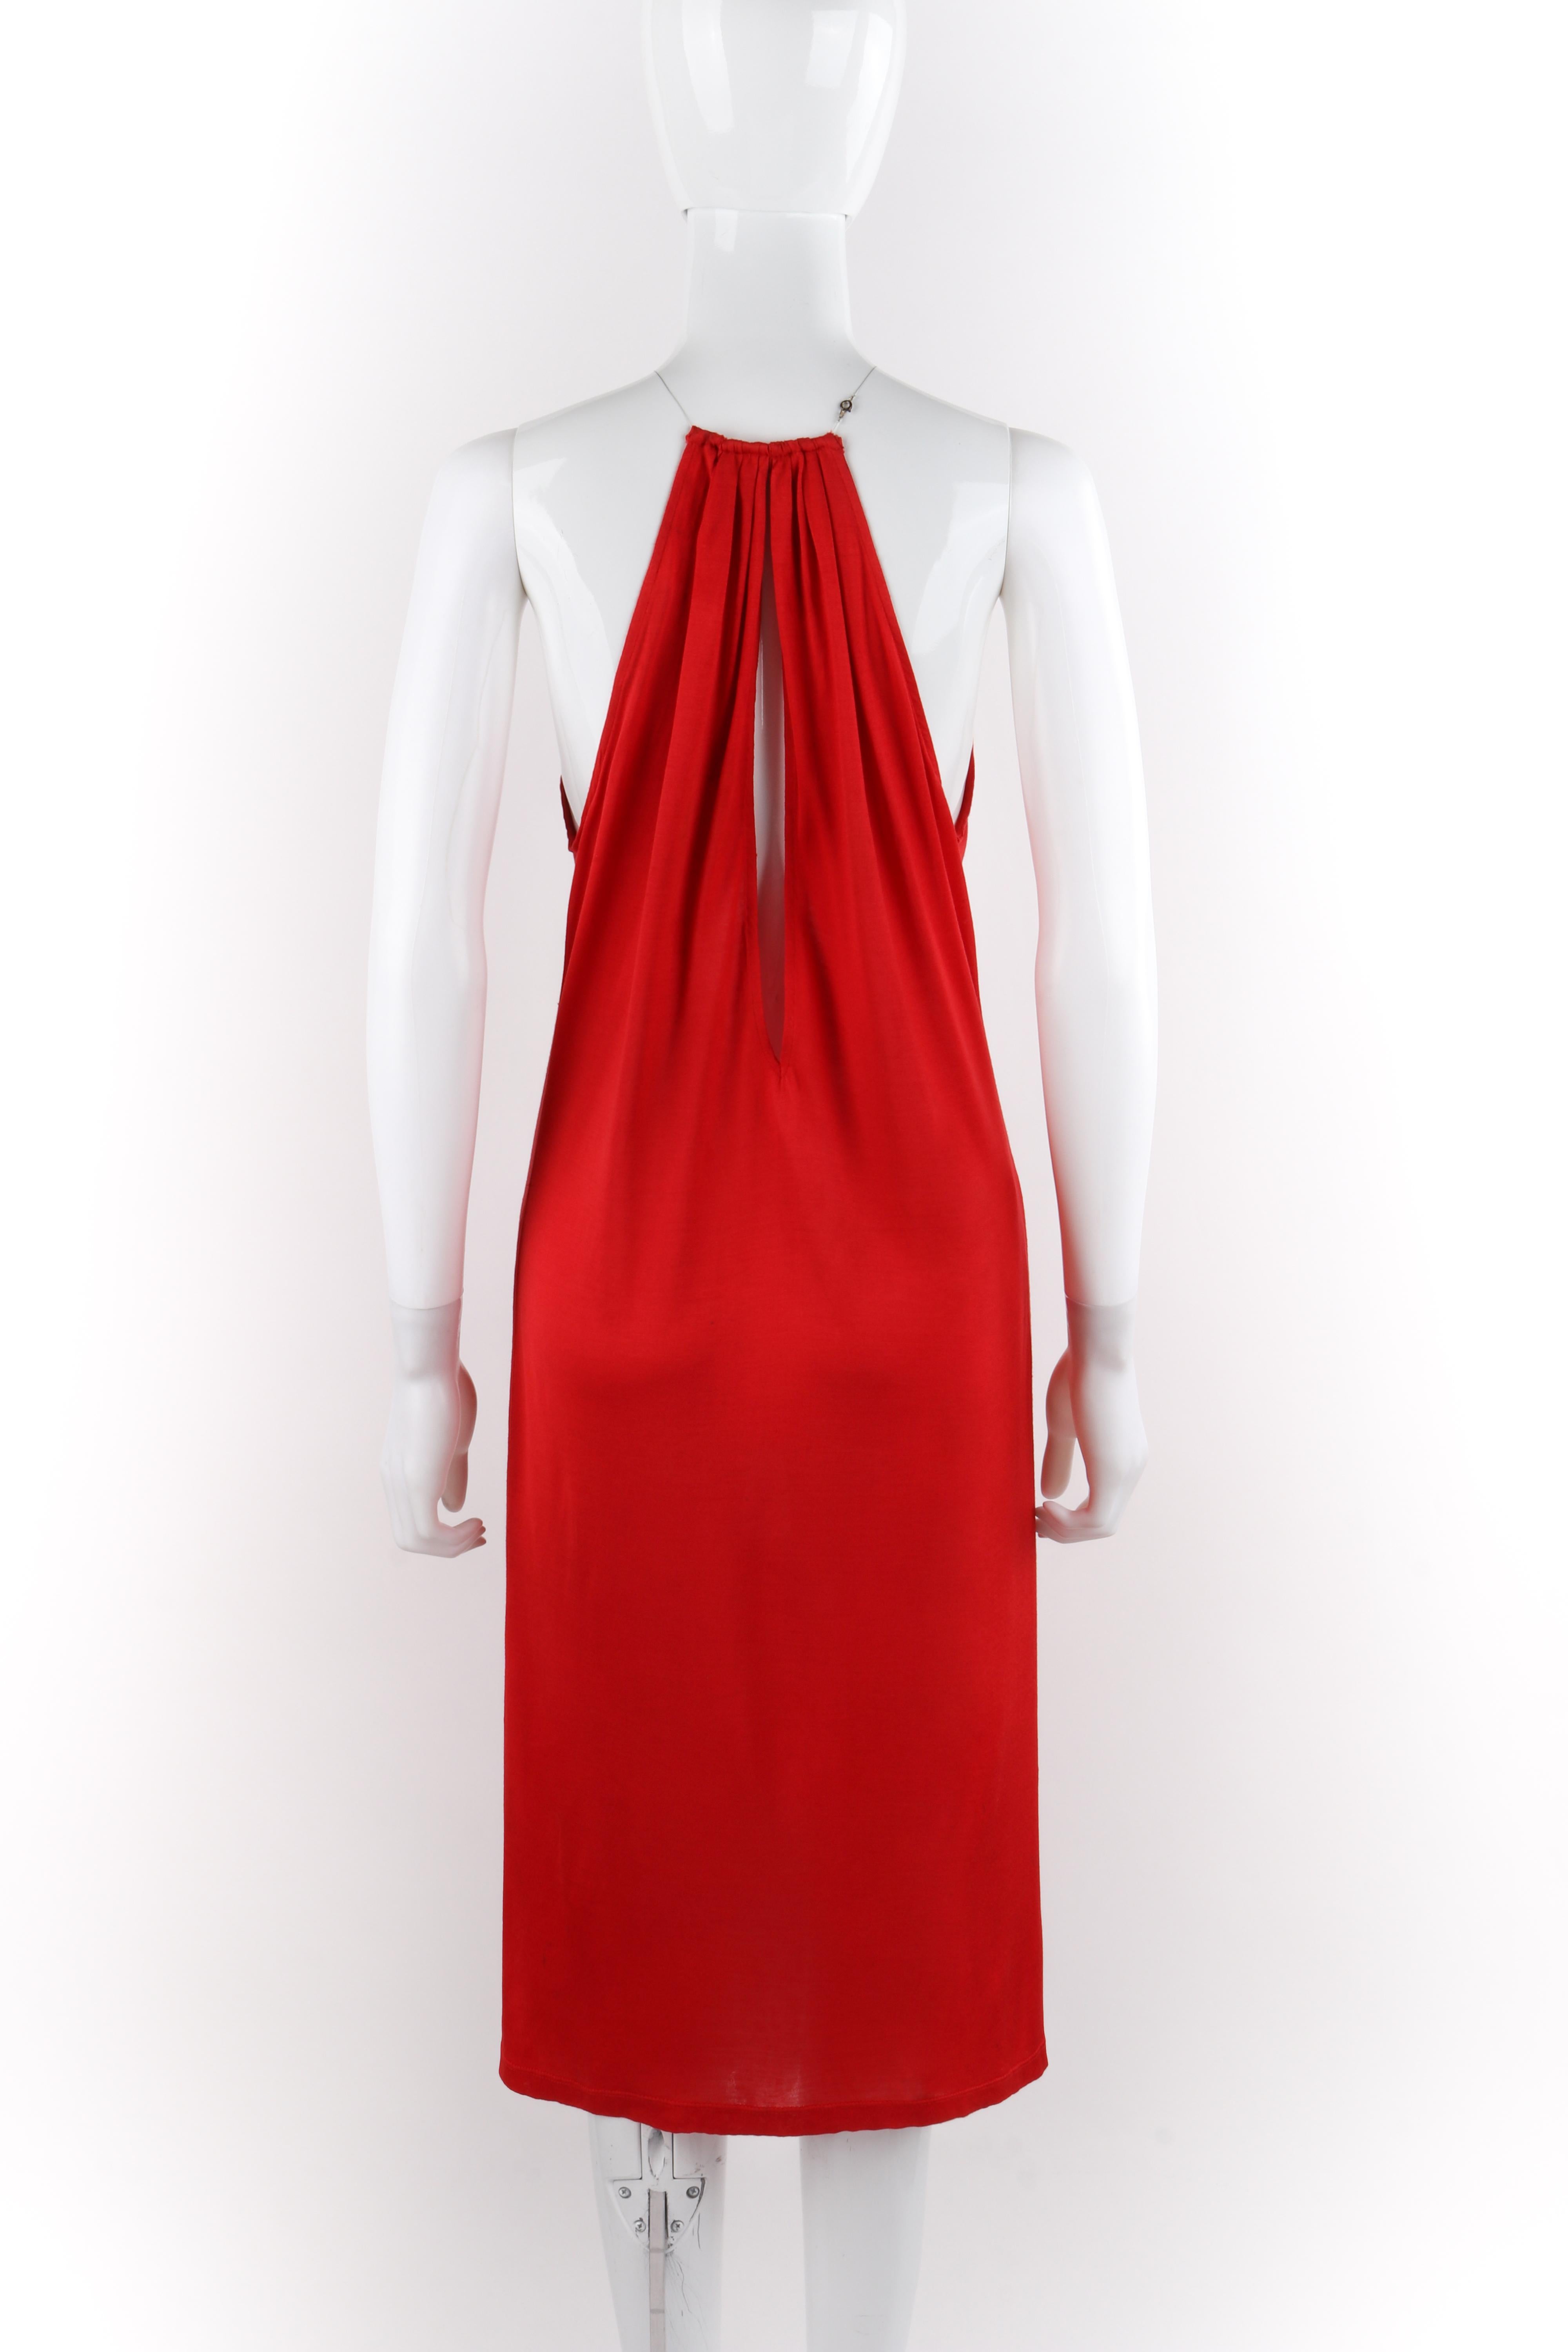 Women's ALEXANDER McQUEEN S/S 2001 “Eye” Red Keyhole Cutout Wire Choker Halter Top Dress For Sale